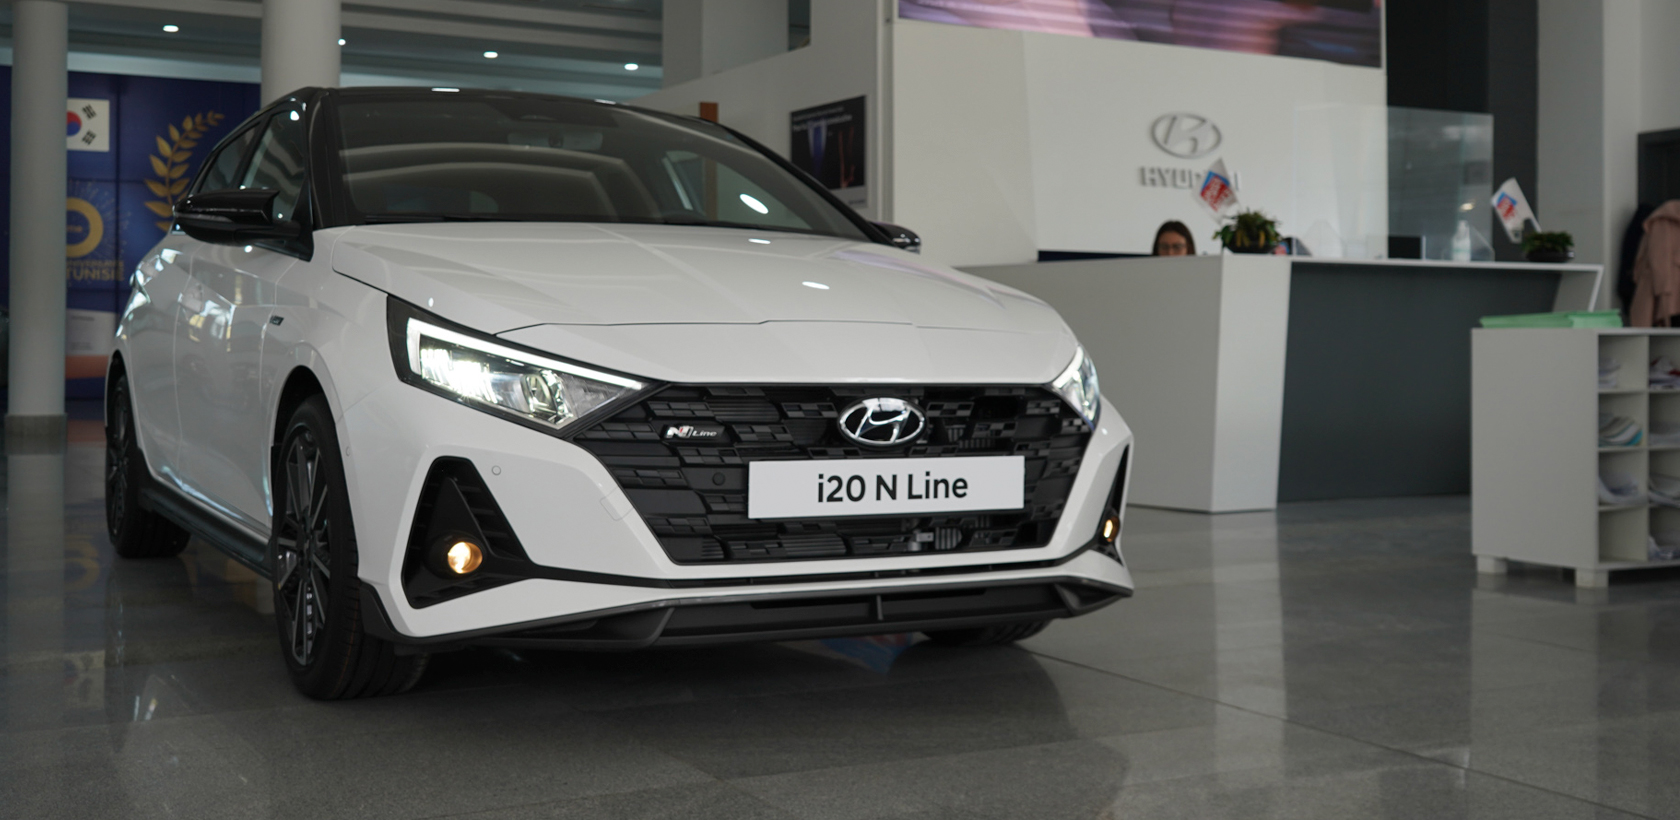 La i20 N line disponible chez Hyundai Tunisie